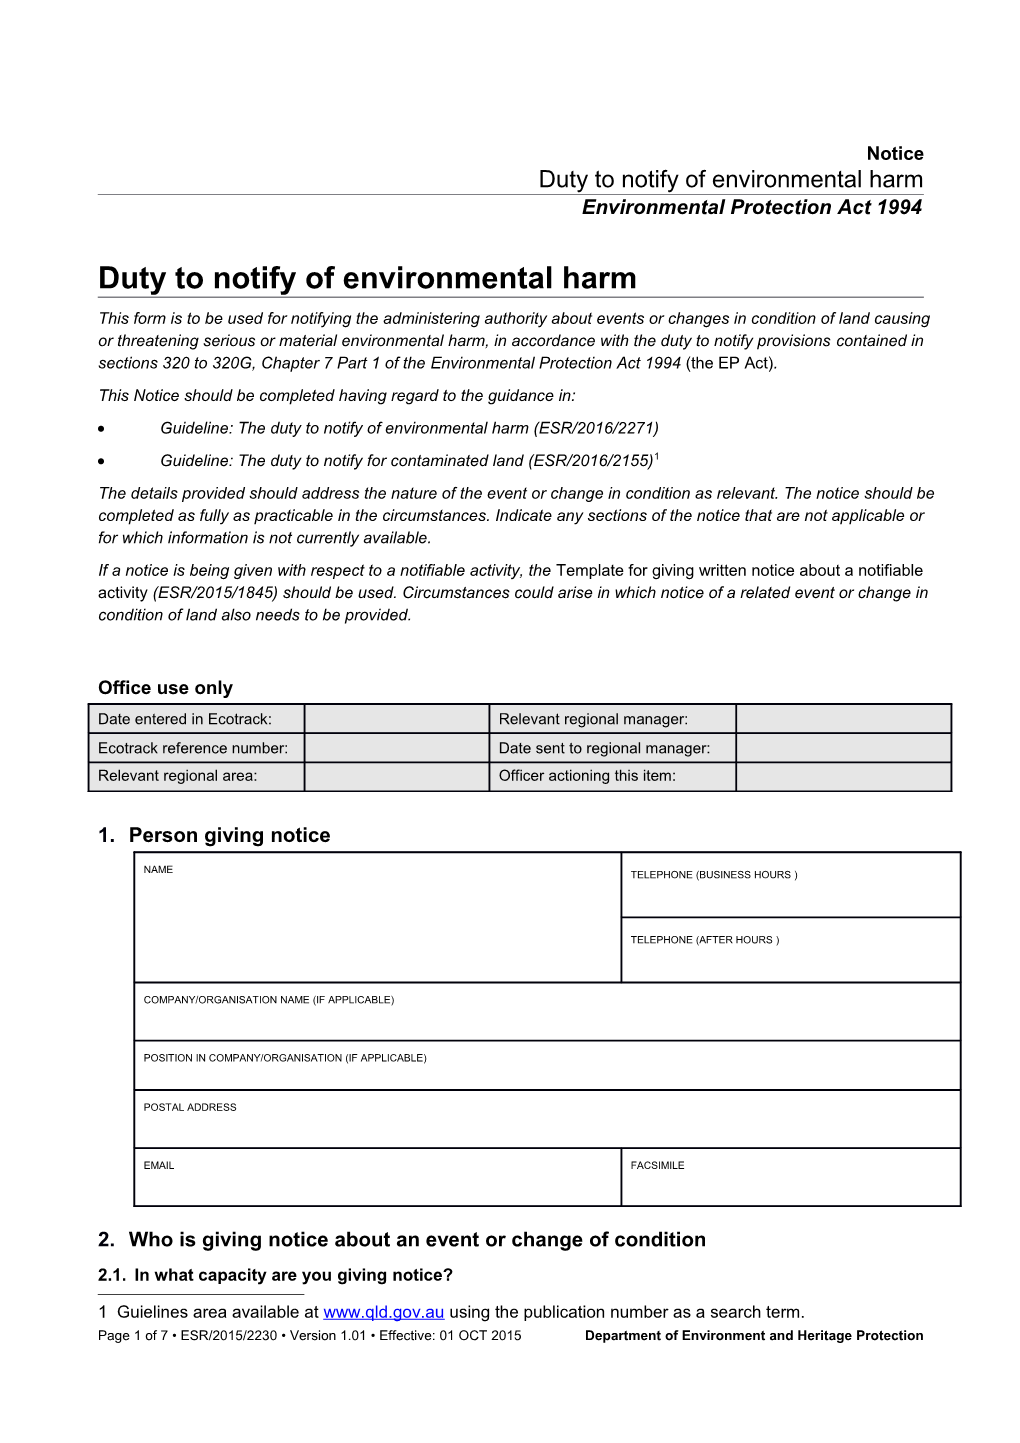 Duty to Notify of Environmental Harm